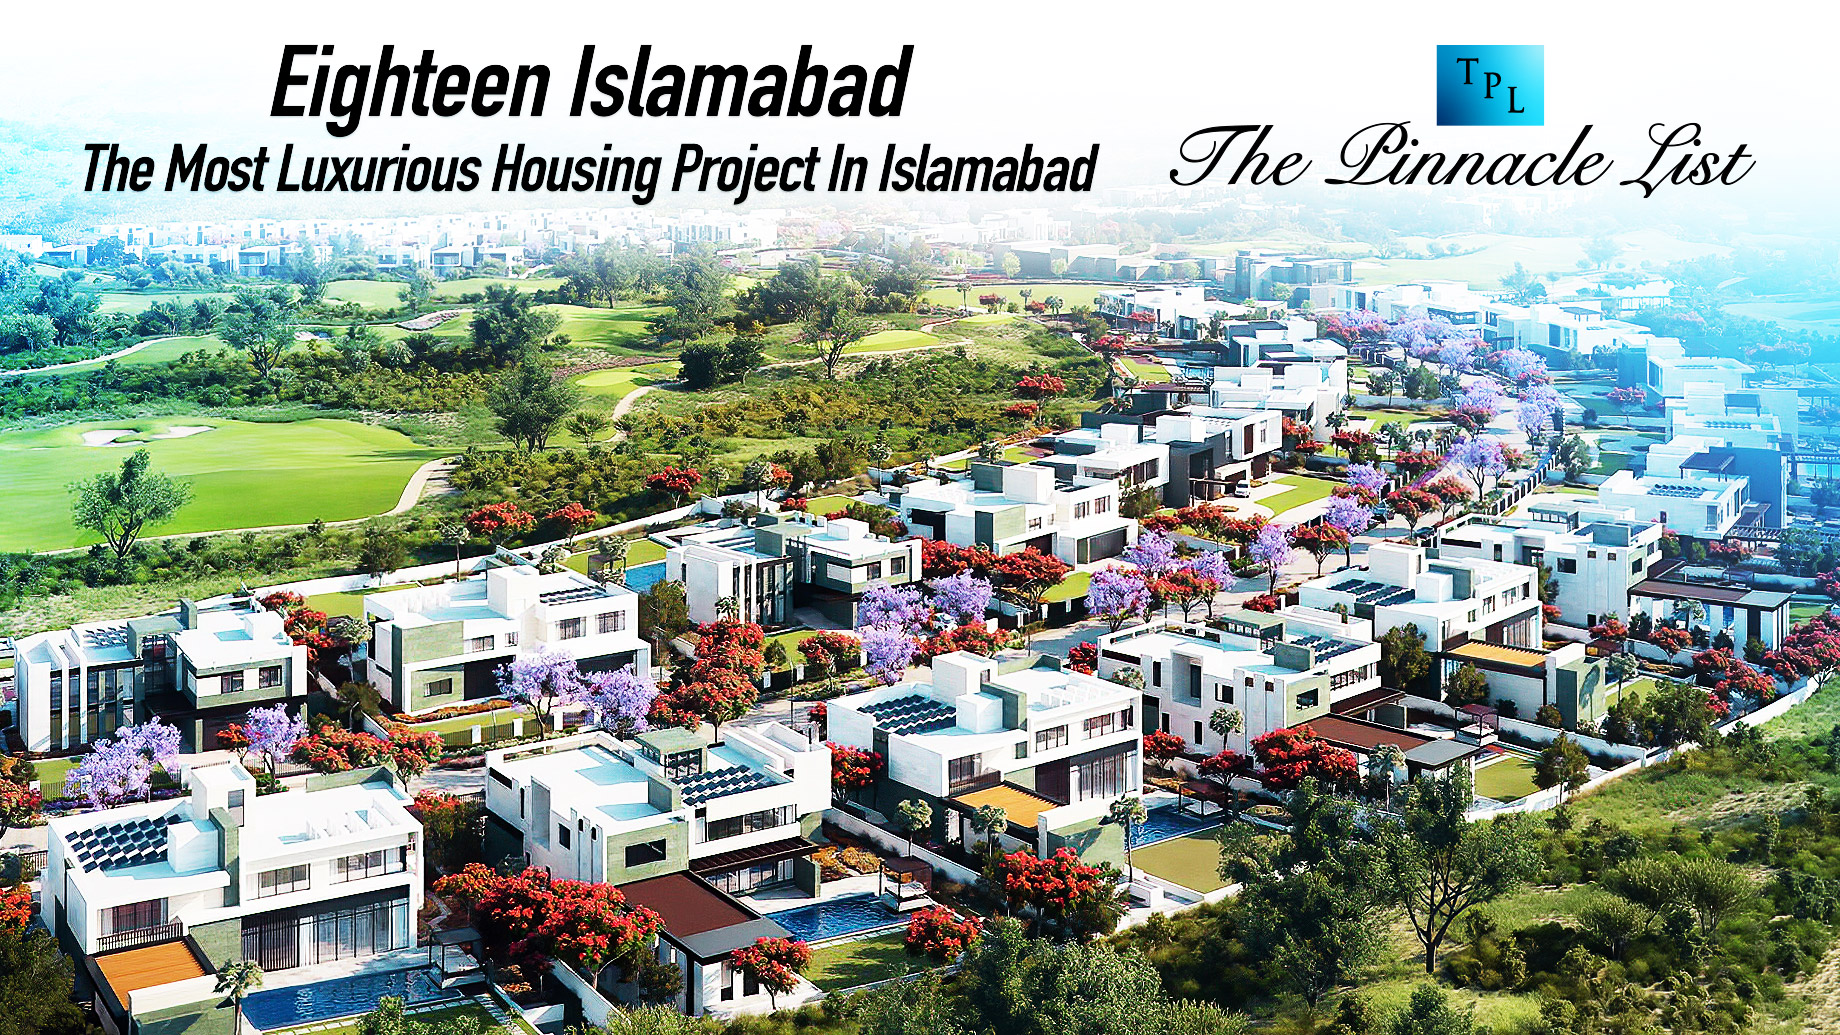 Eighteen Islamabad - Most Luxurious Housing Project In Islamabad, Pakistan